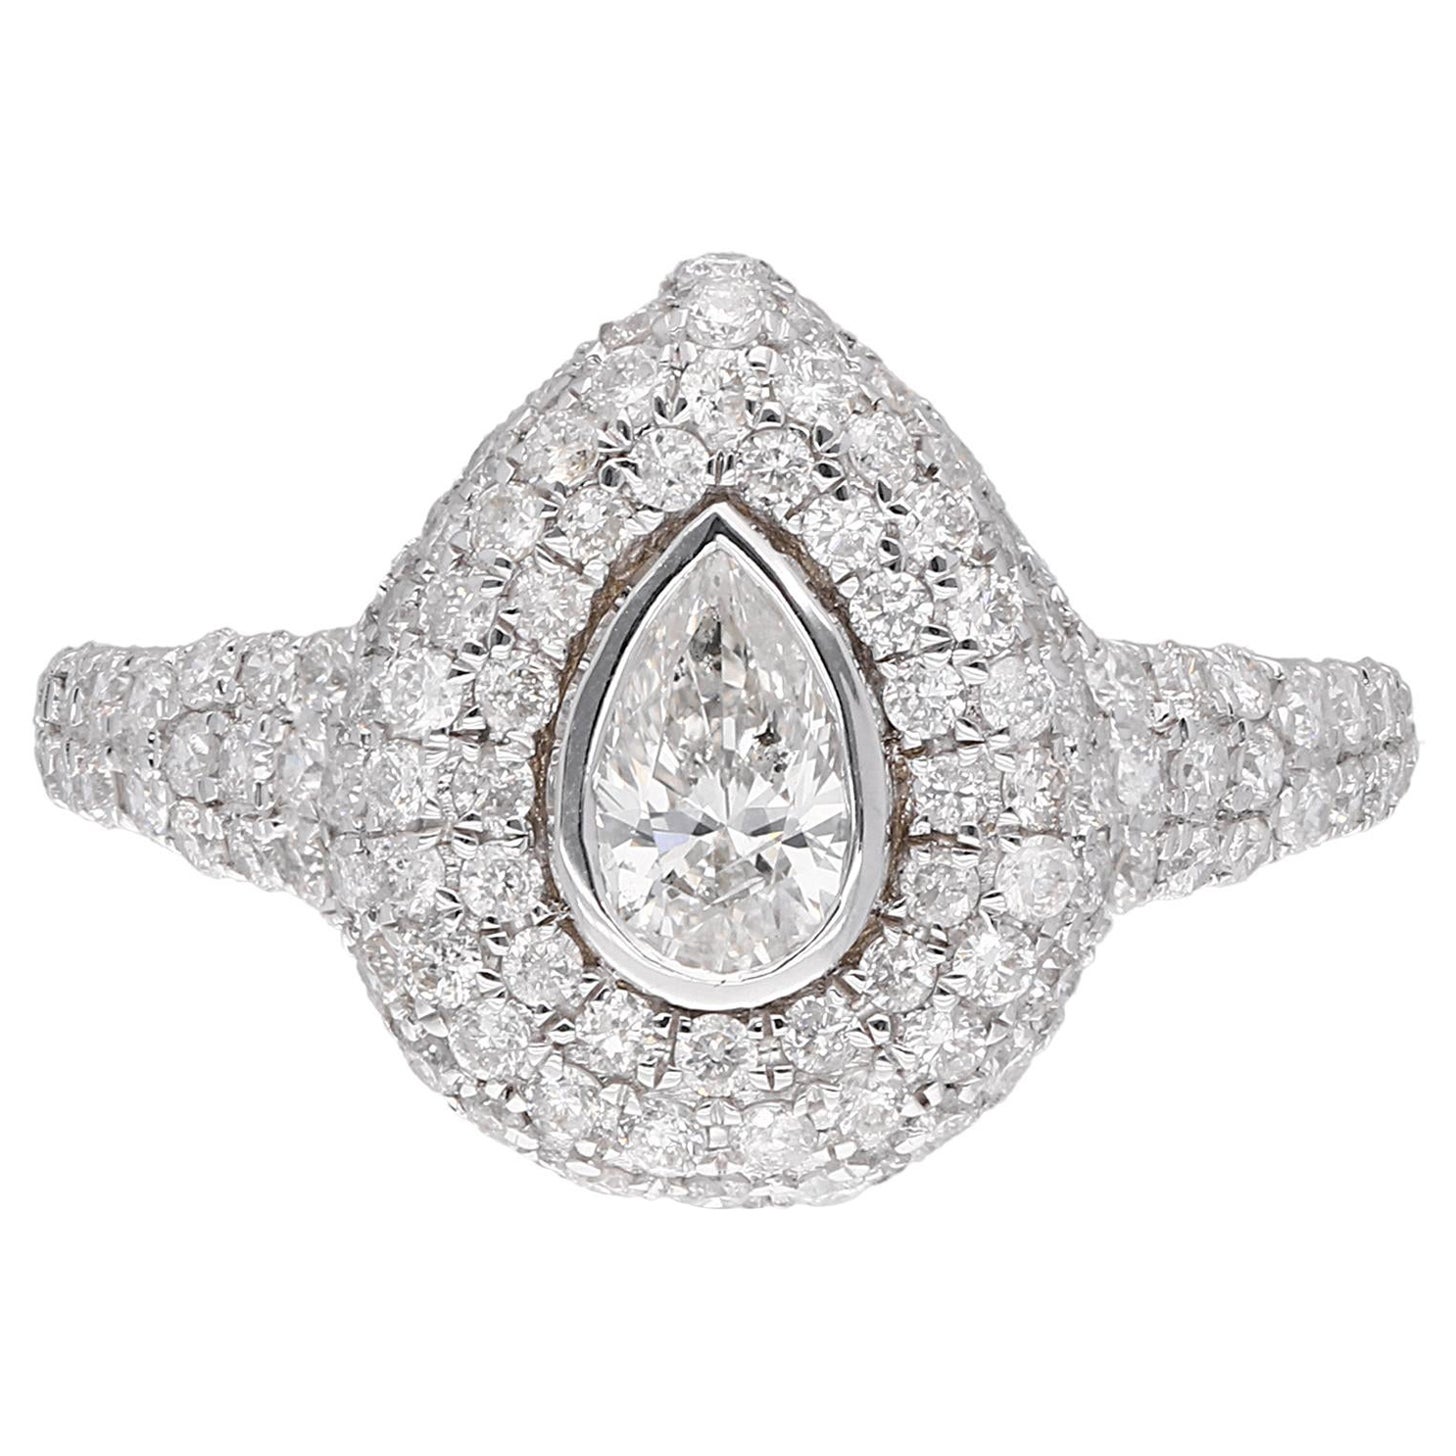 1.54 Carat Pear Diamond Studded Ring 18 Karat White Gold Handmade Fine Jewelry